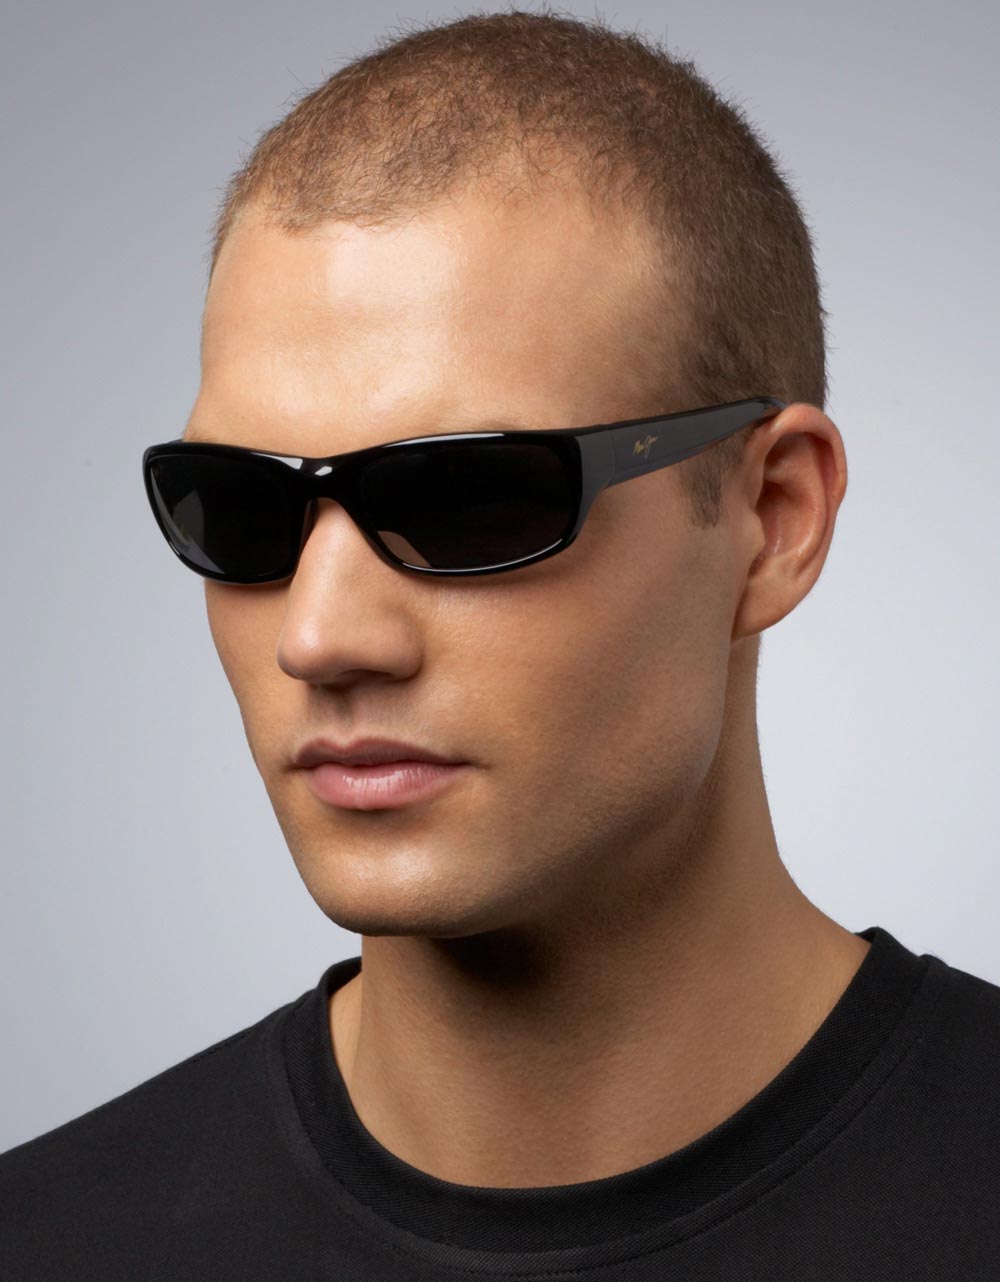 Lyst - Maui Jim Stingray Sunglasses in Black for Men